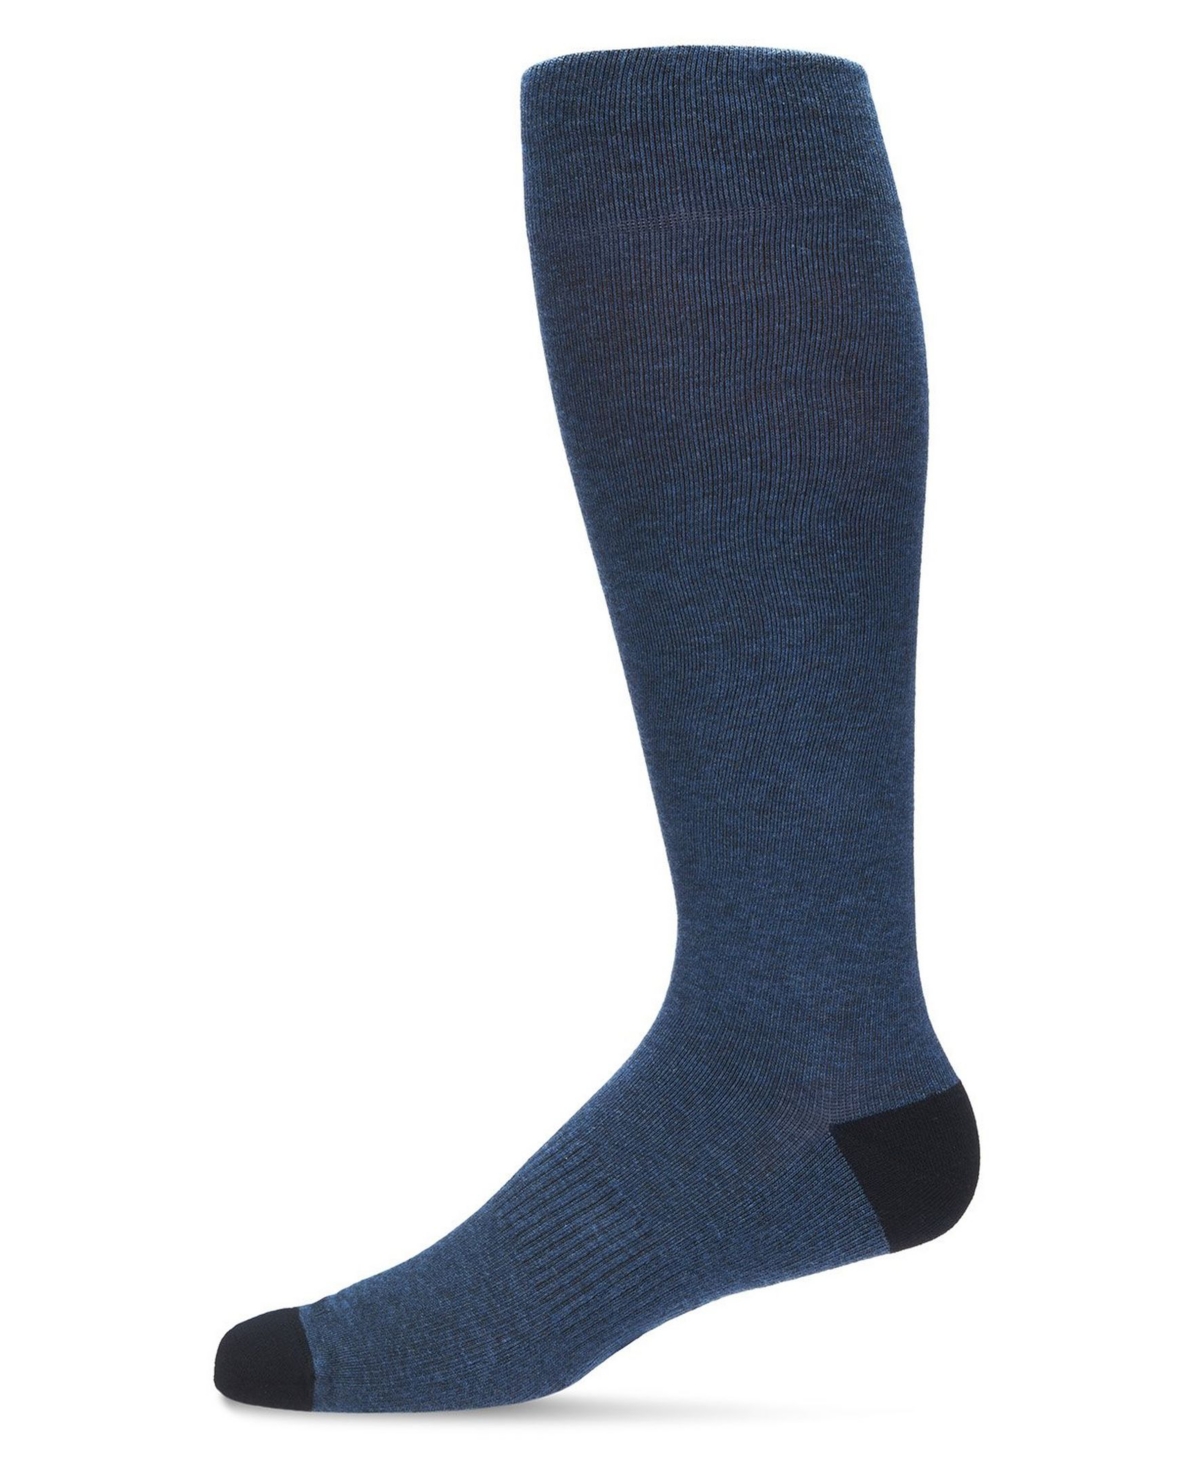 Men's Solid Cotton Compression Socks - Denim Heather